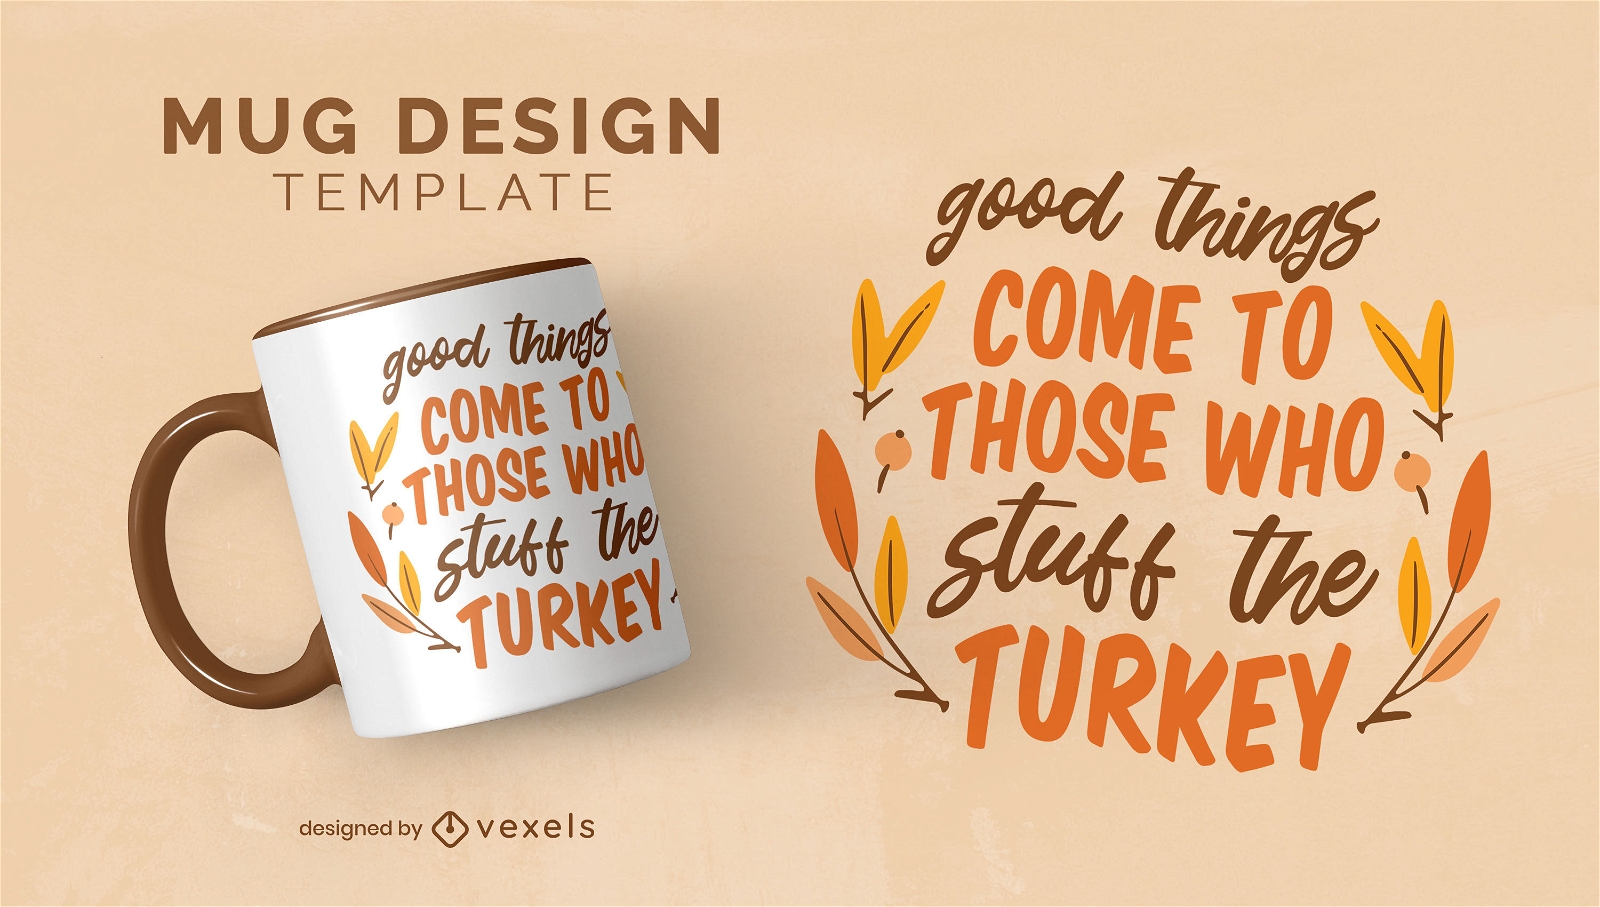 Stuff the turkey Thanksgiving mug design